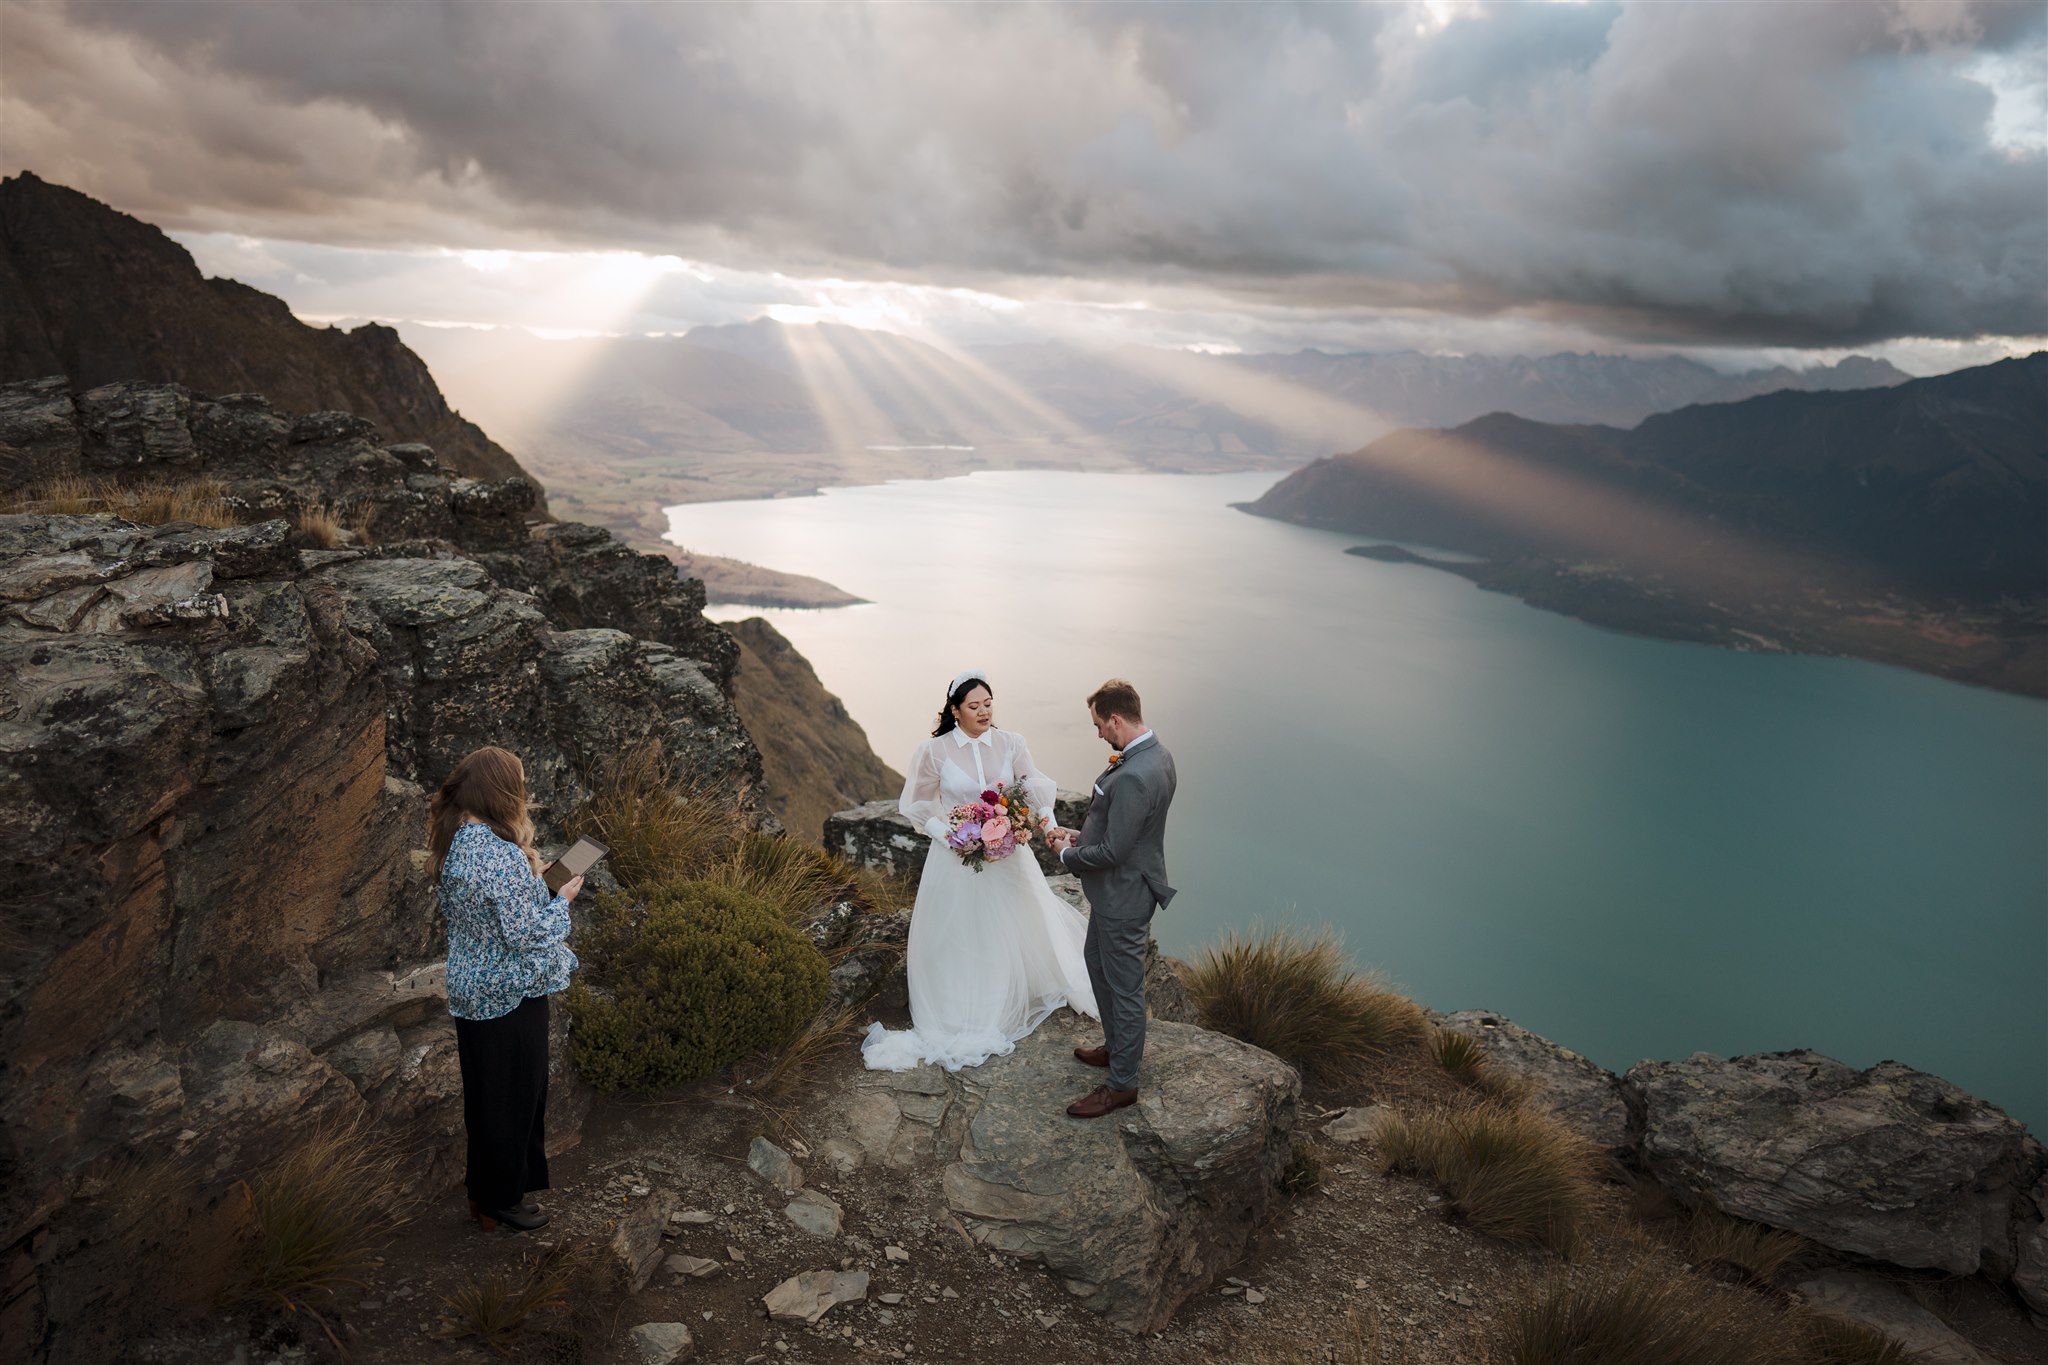 Queenstown wedding celebrant officiates wedding ceremony at Cecil Peak mountain top at sunset in Queenstown New Zealand